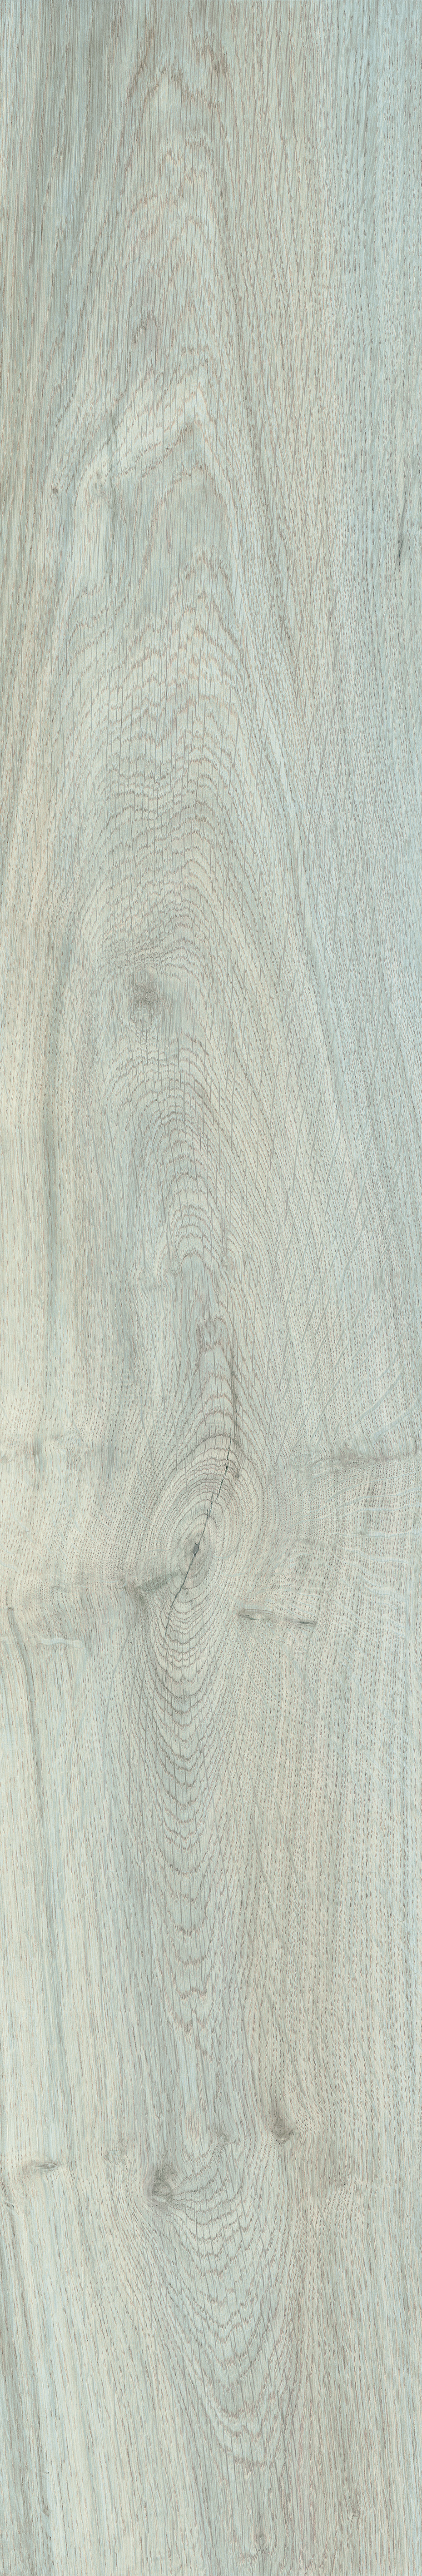 0-md bl wood bianco (2).jpg